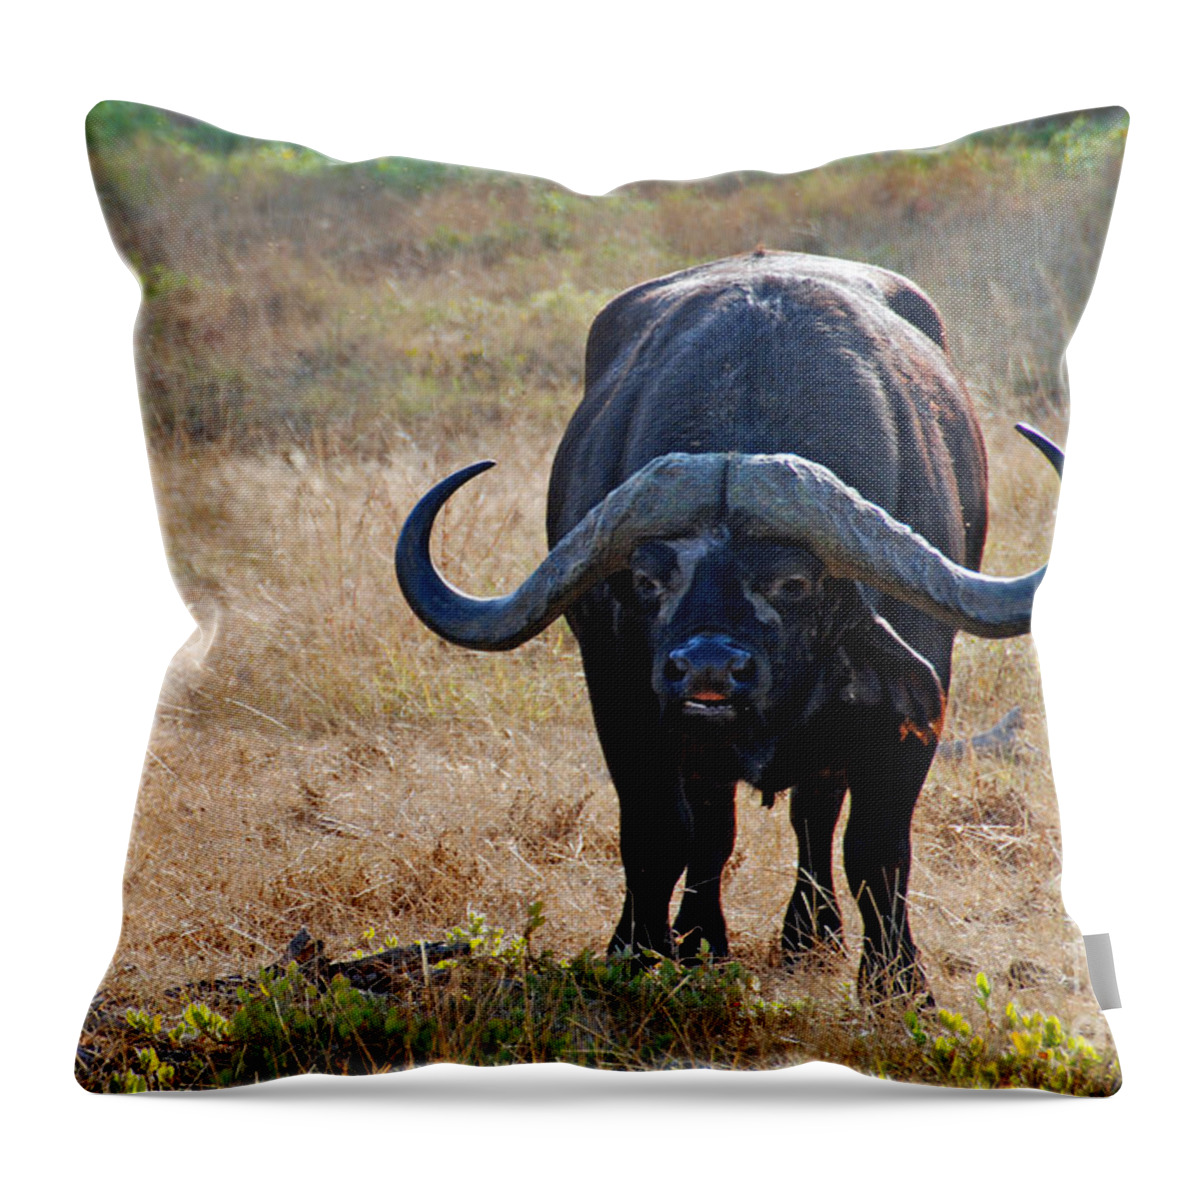 Cape Buffalo Throw Pillow featuring the digital art Cape Buffalo by Pravine Chester